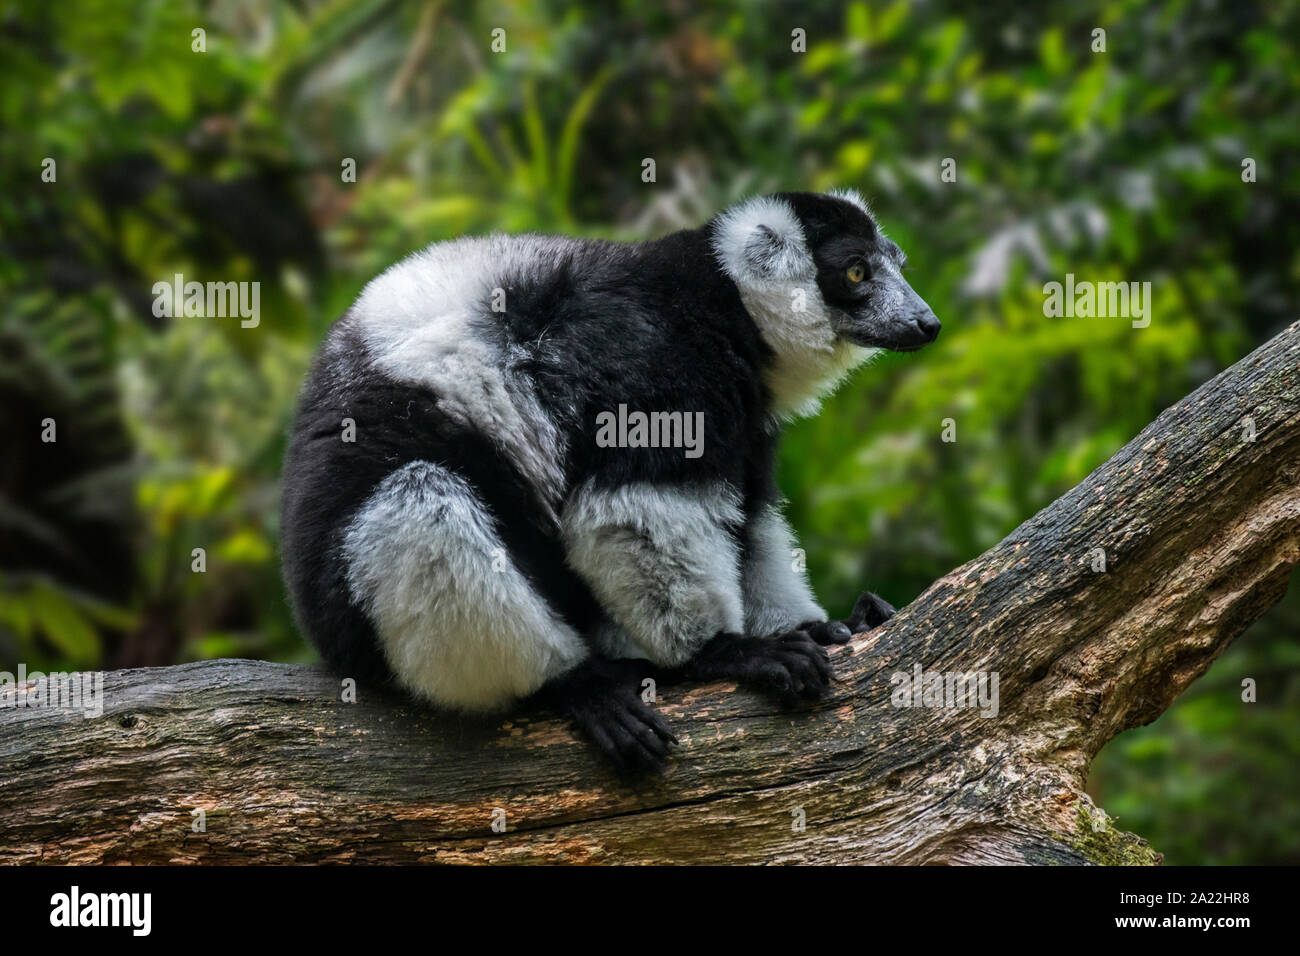 White-belted black-and-white ruffed lemur (Varecia variegata ssp. subcincta) endemic to Madagascar Stock Photo